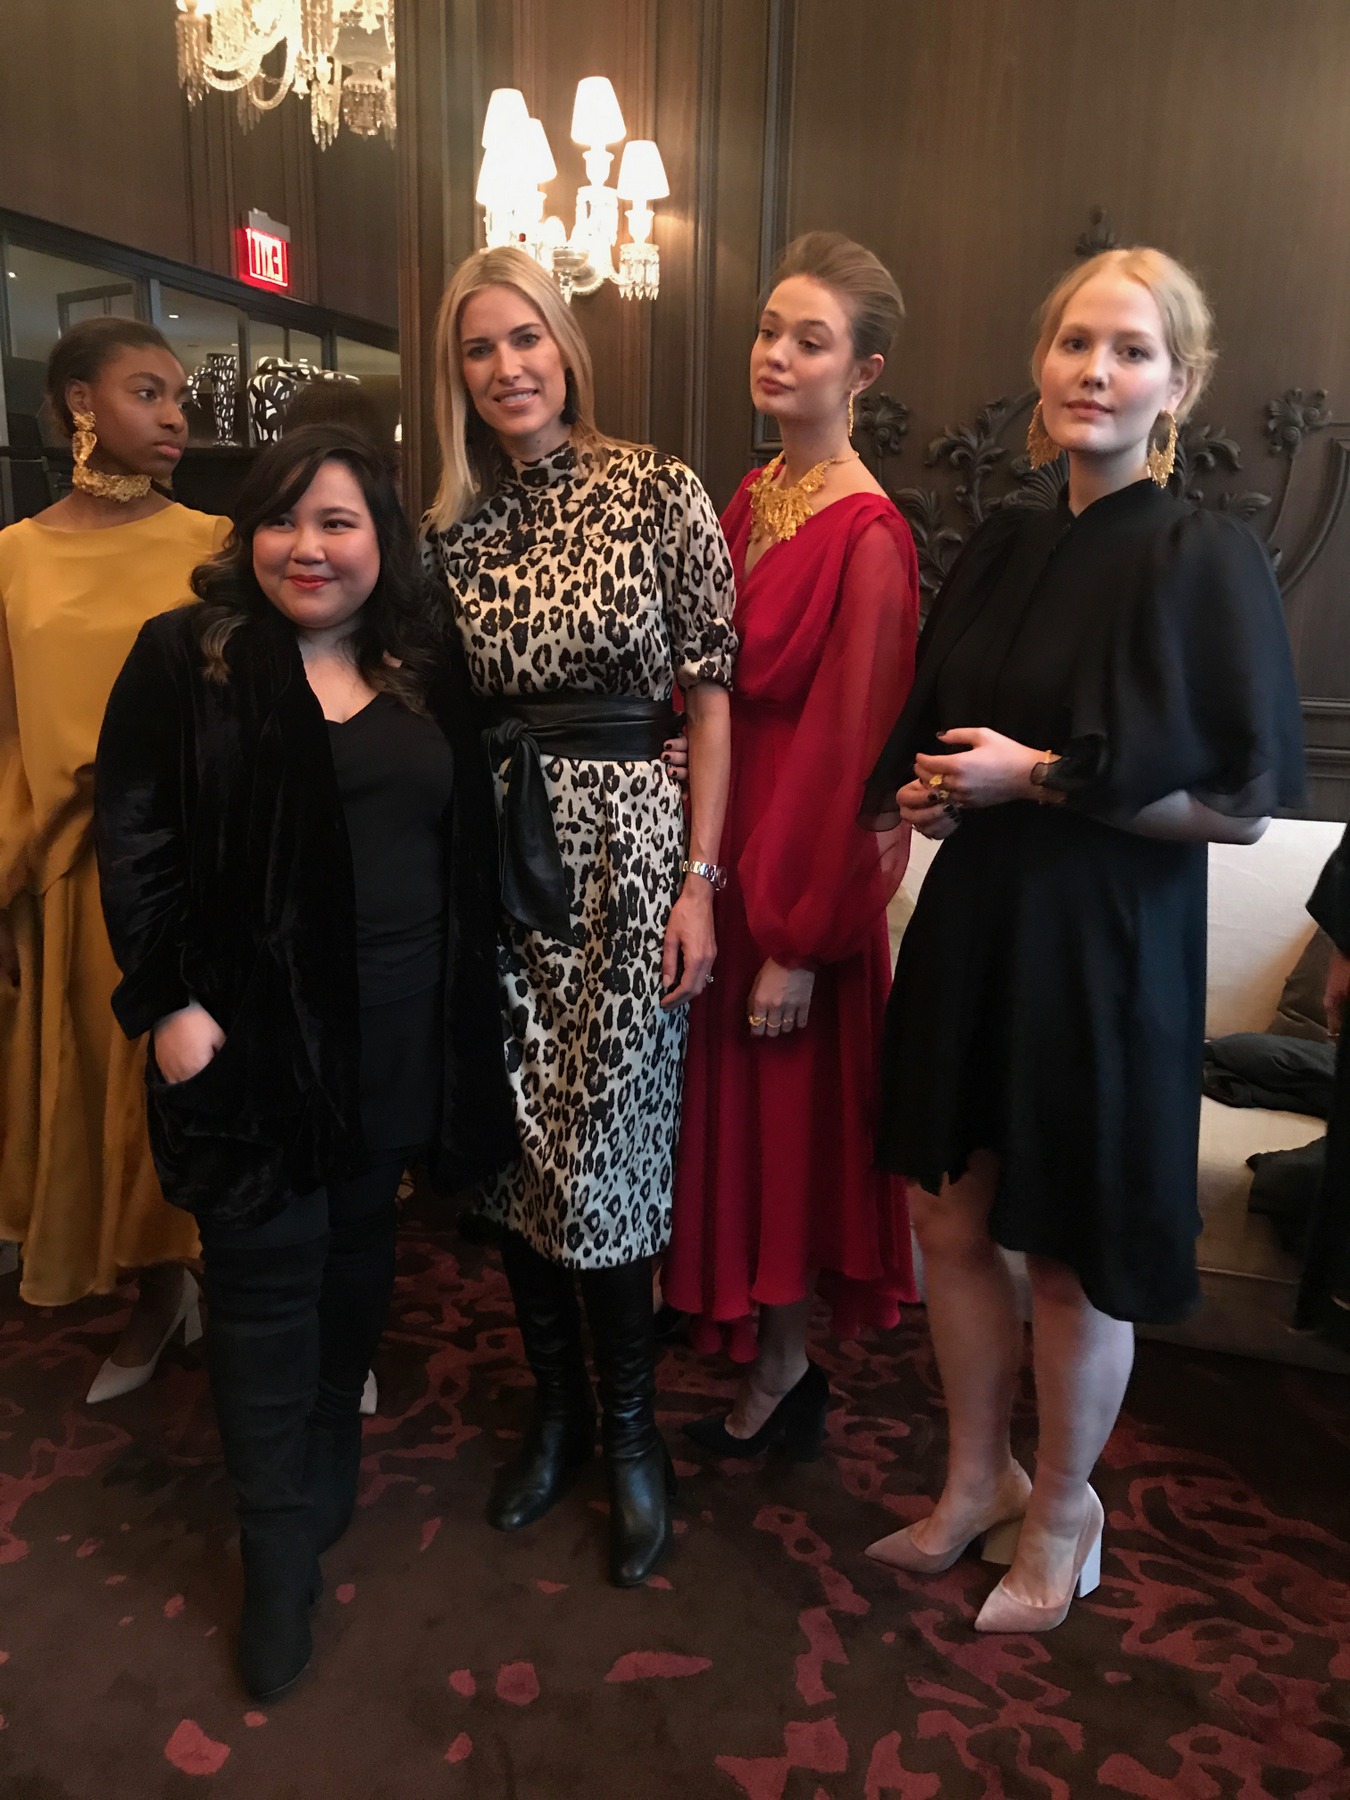 Kristen Taekman - New York Fashion Week 2018- The Year of the Woman!